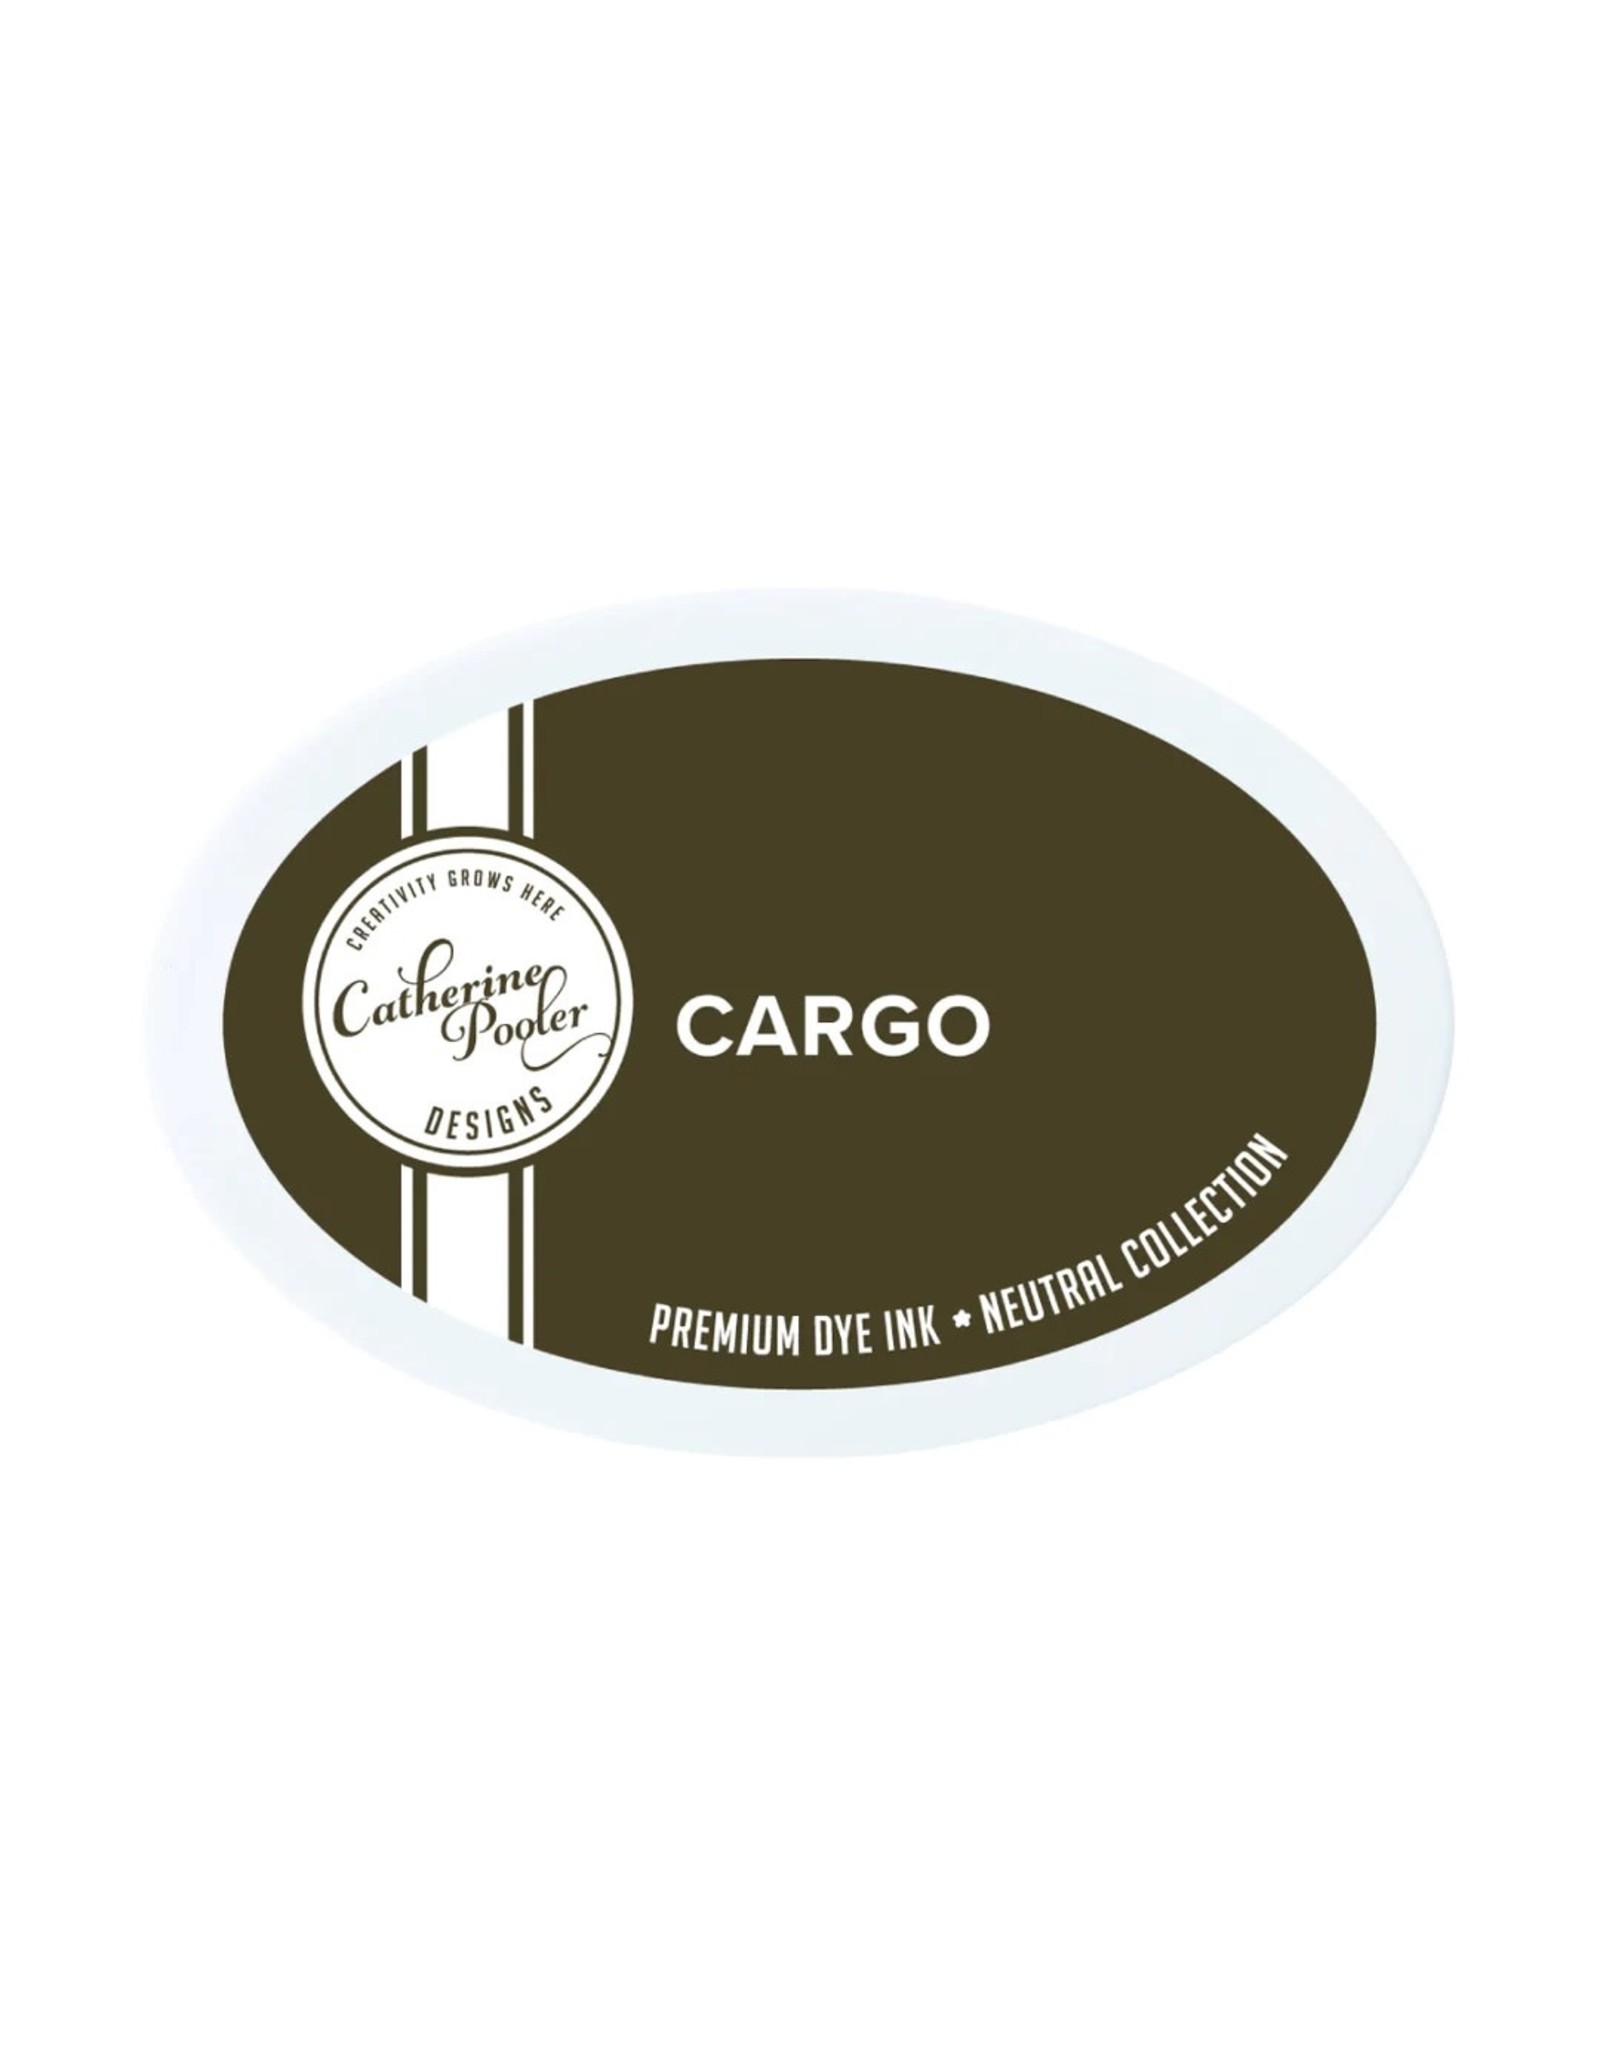 Catherine Pooler Designs Cargo Ink Pad